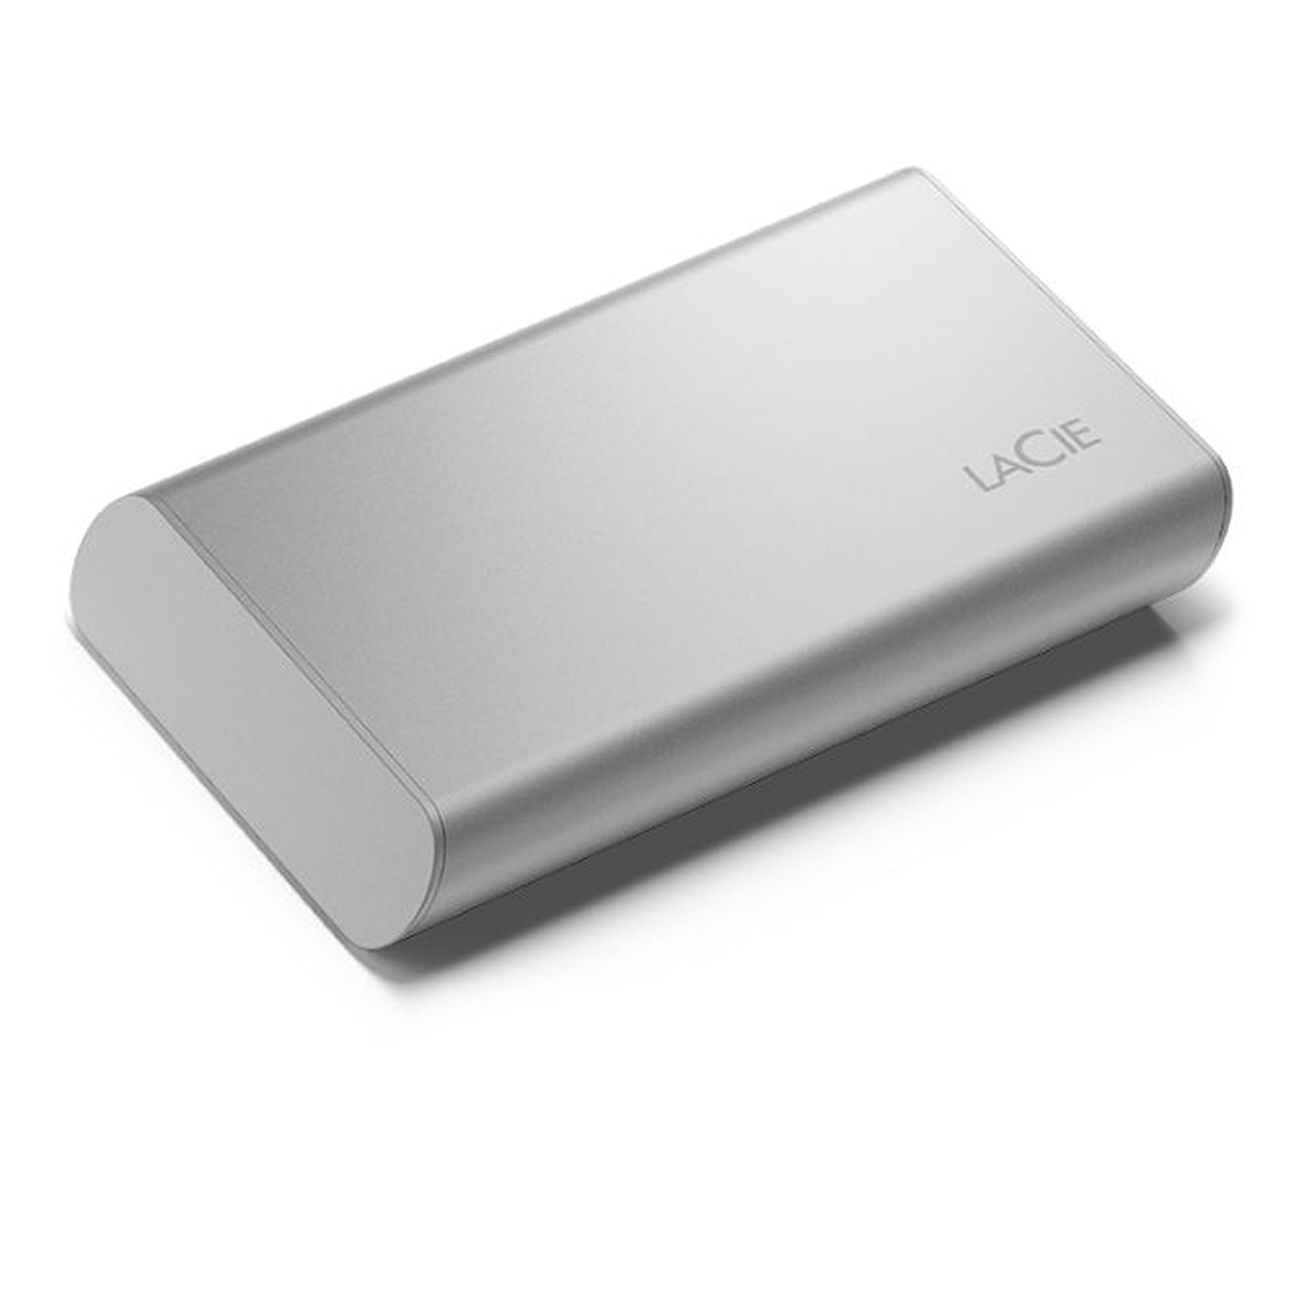 Фото - Внешний SSD LaCie 2TB (STKS2000400) lacie portable ssd v2 stks1000400 серый